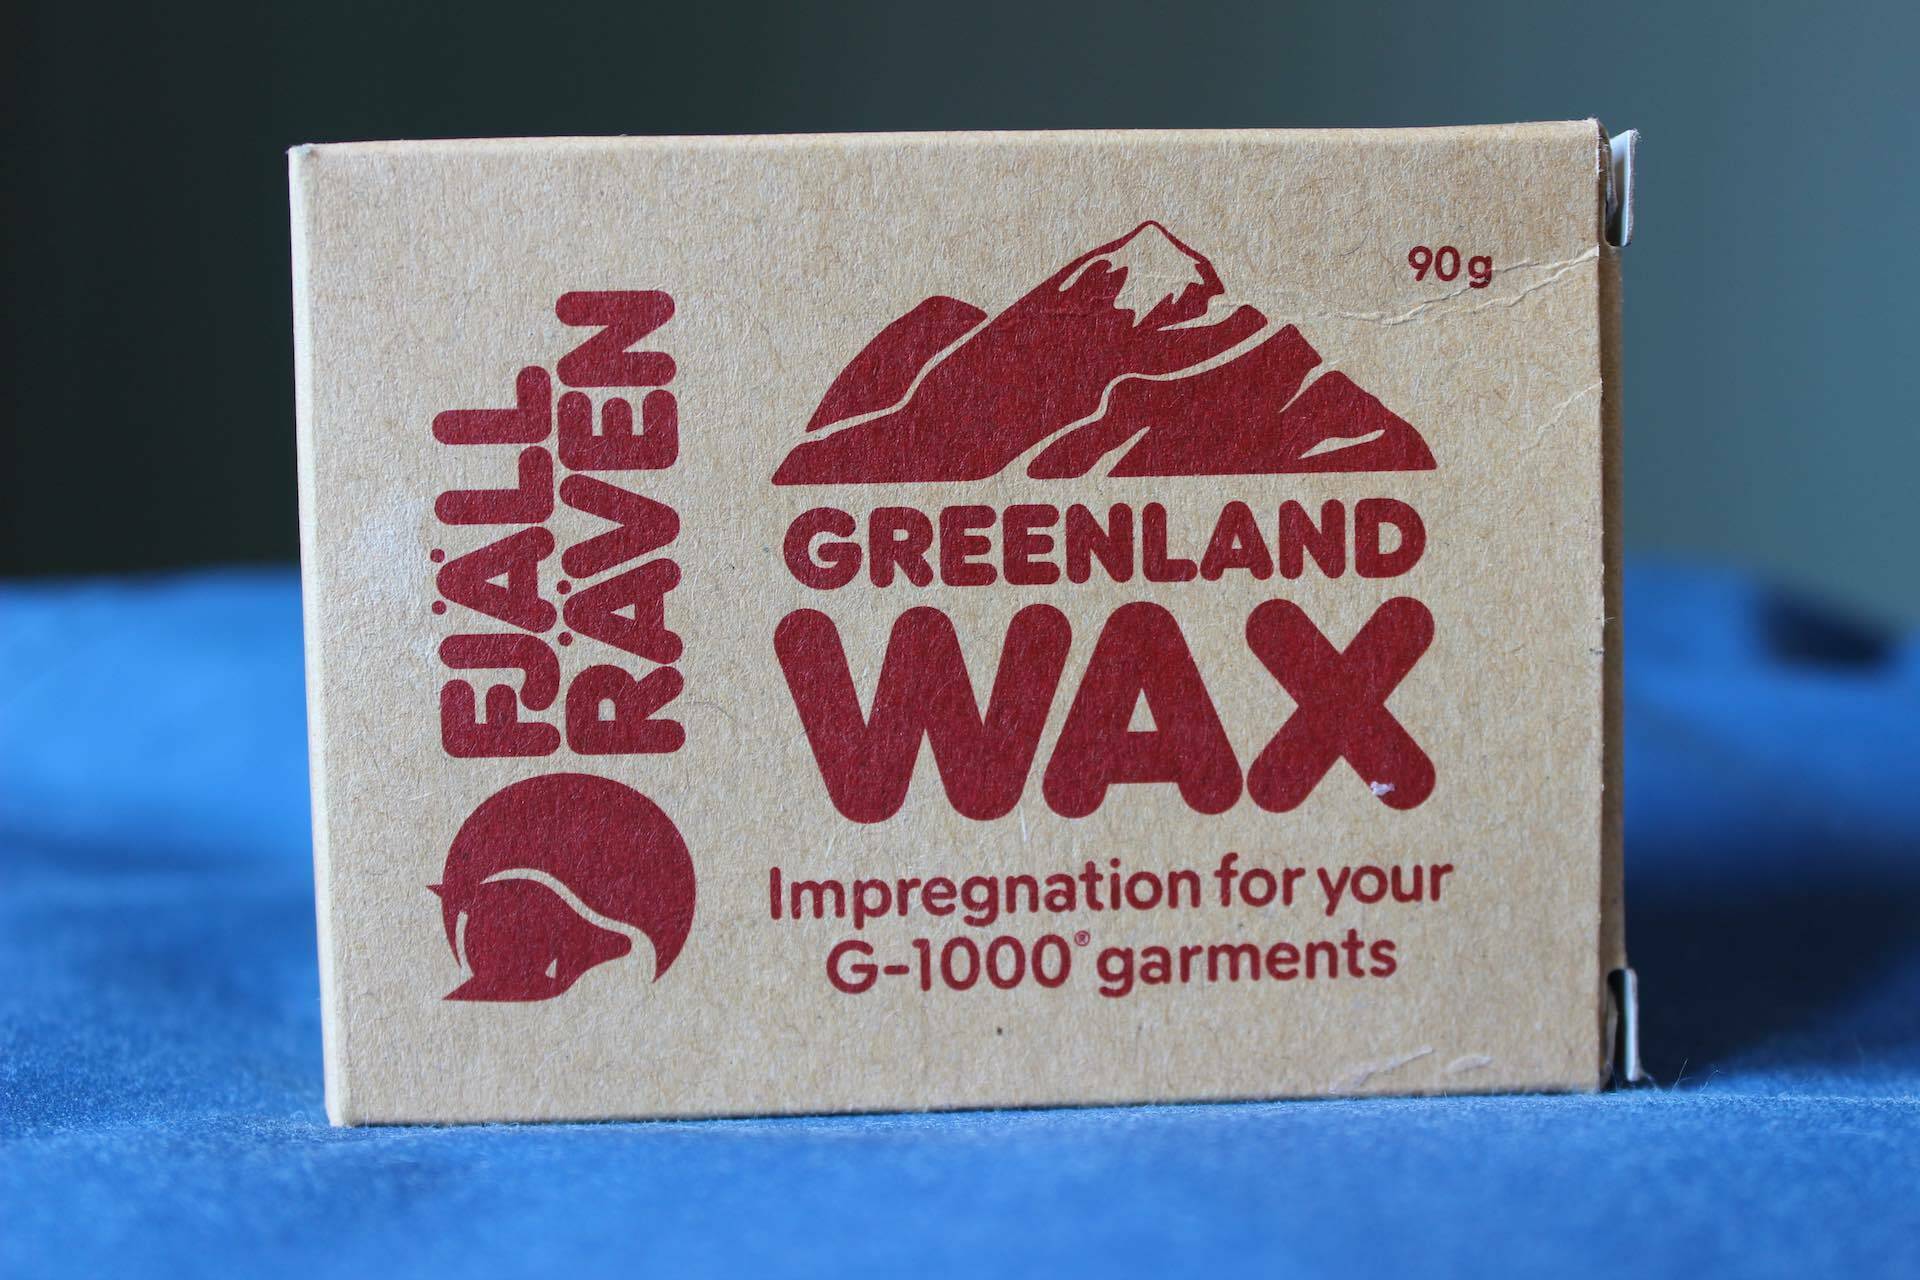 Melting Fjällräven Greenland Wax into a WM.A.C MC Jacket on Vimeo